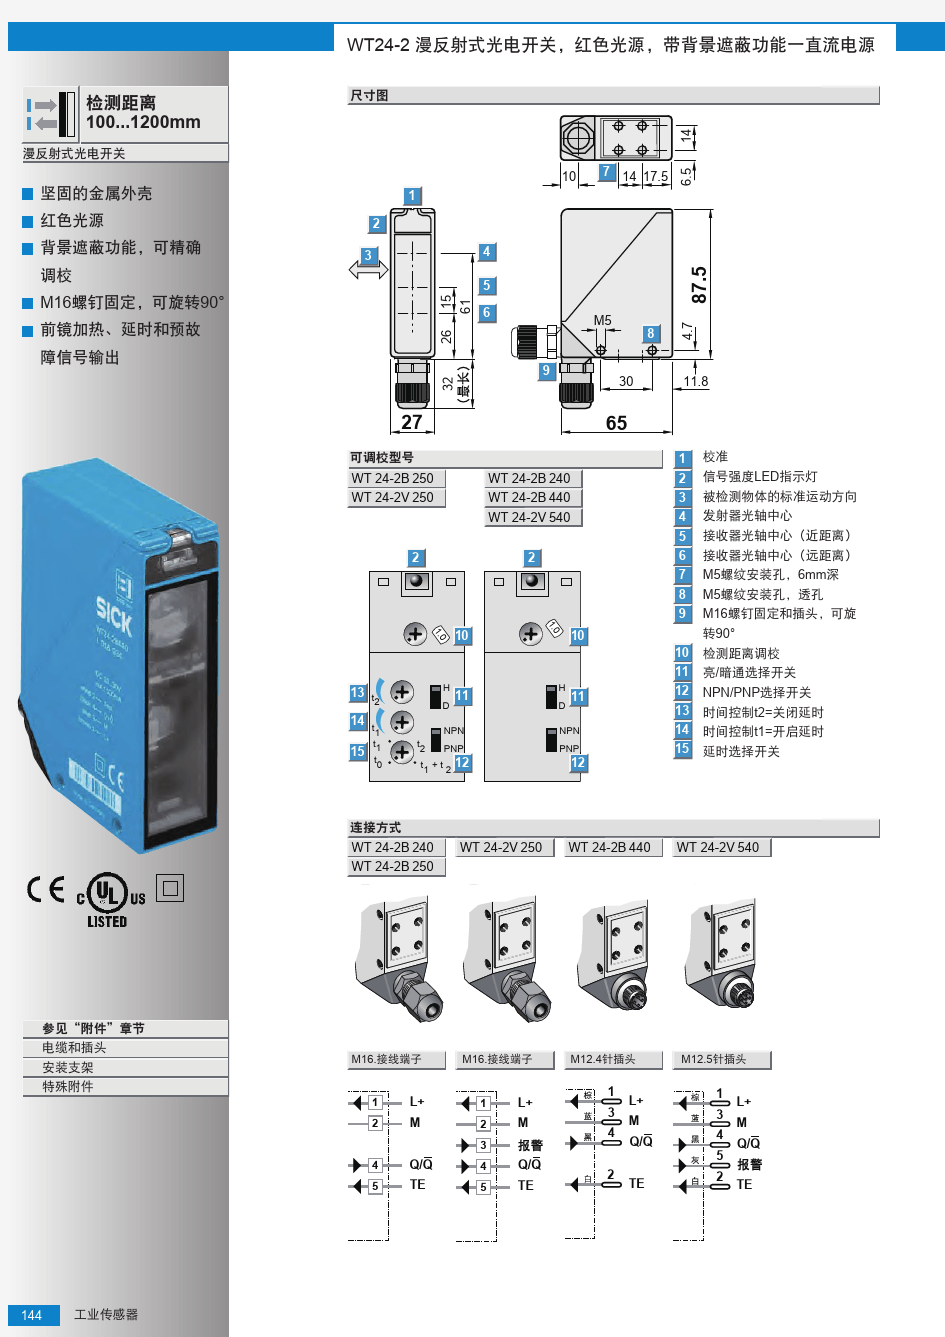 W24-2紧凑型光电传感器选型手册(中文版)